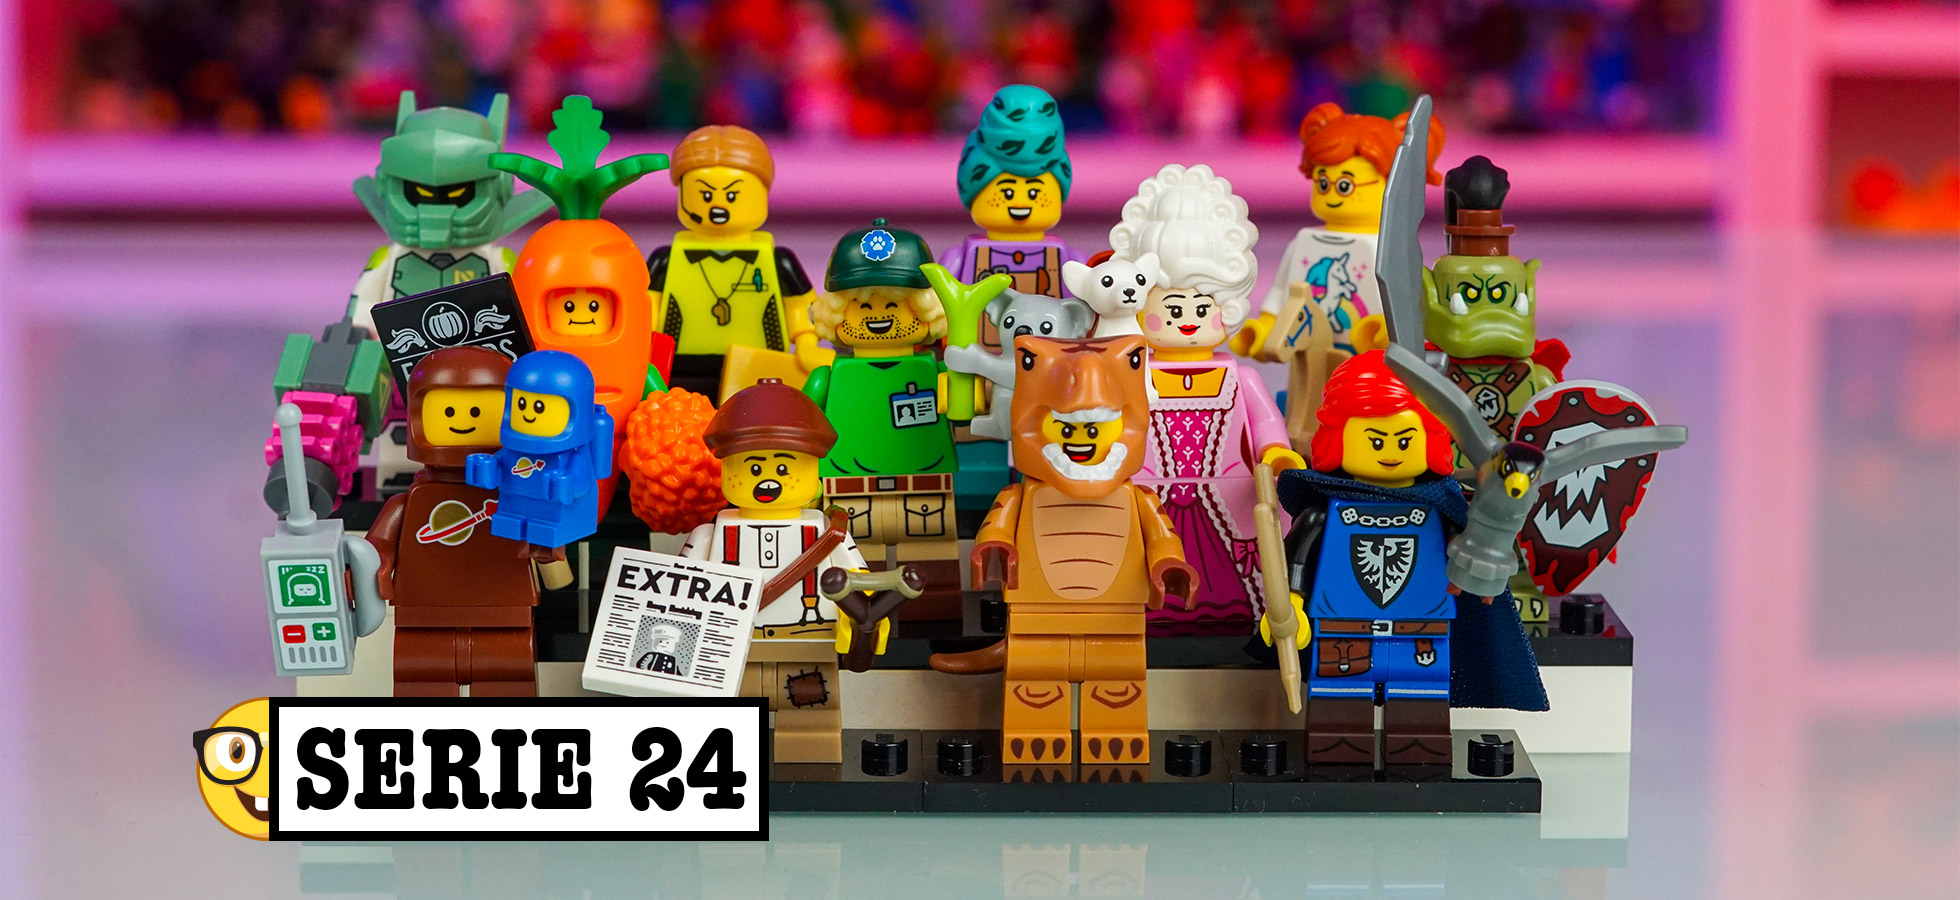 Recensione LEGO Minifigures Serie 24 (71037) - Affari da Nerd